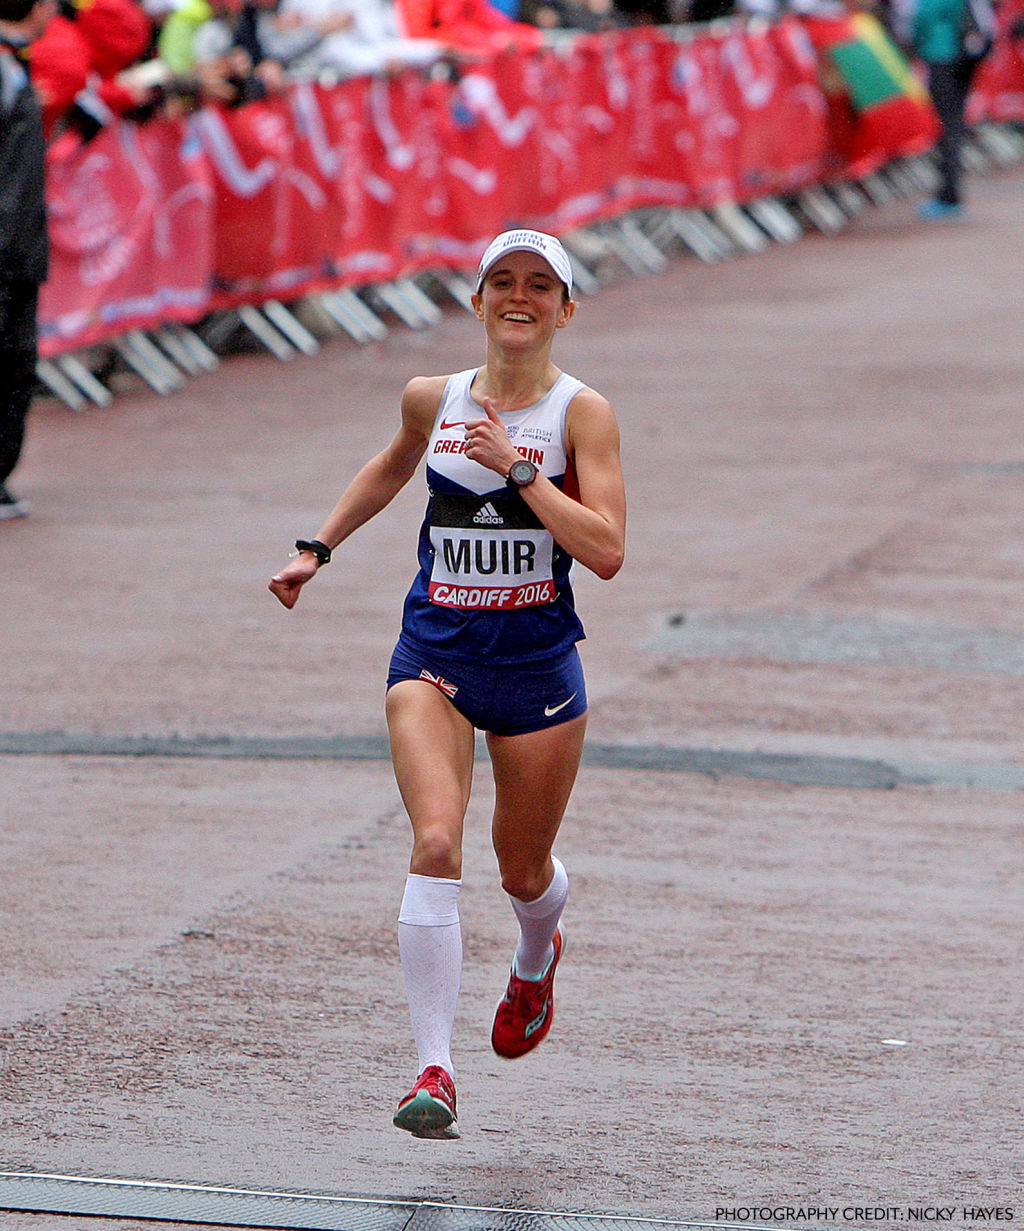 Tina Muir joyfully running in a race with onlookers